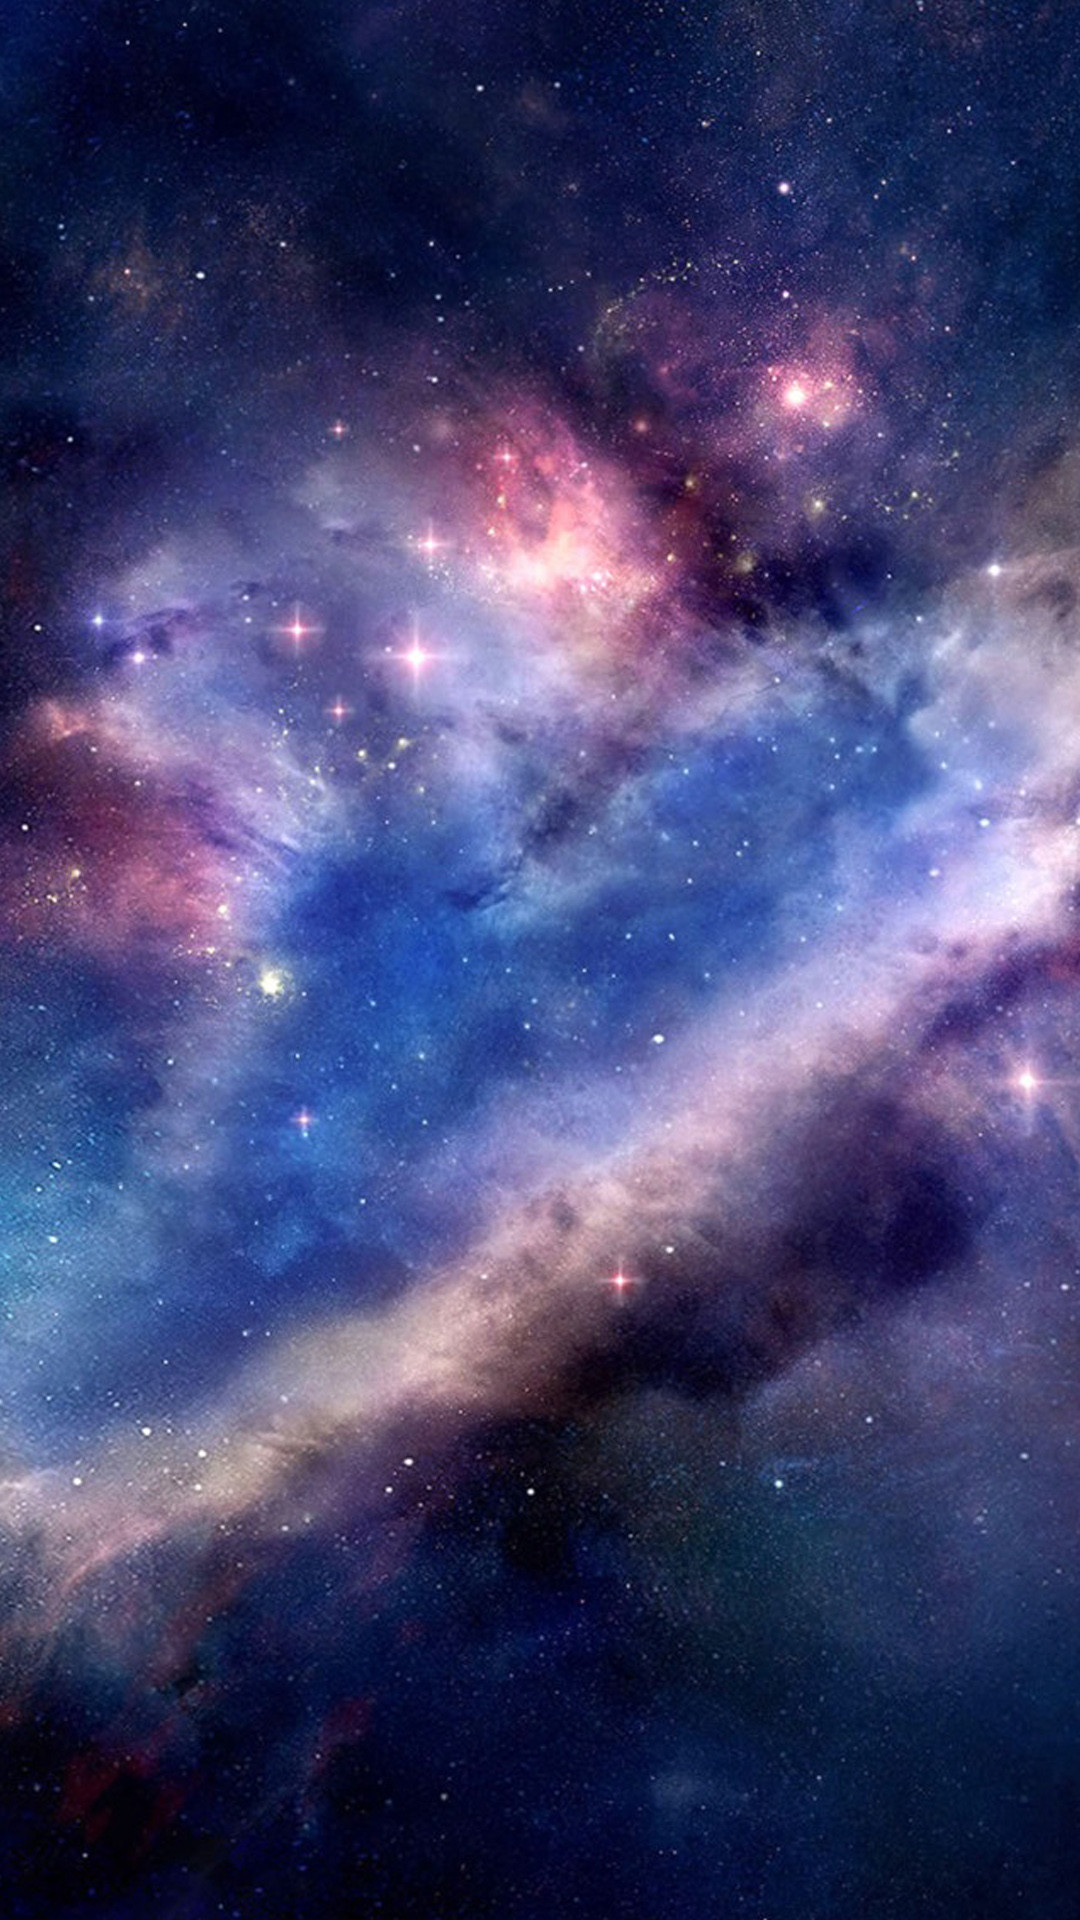 Best Blue galaxy wallpaper ideas on Pinterest Galaxy